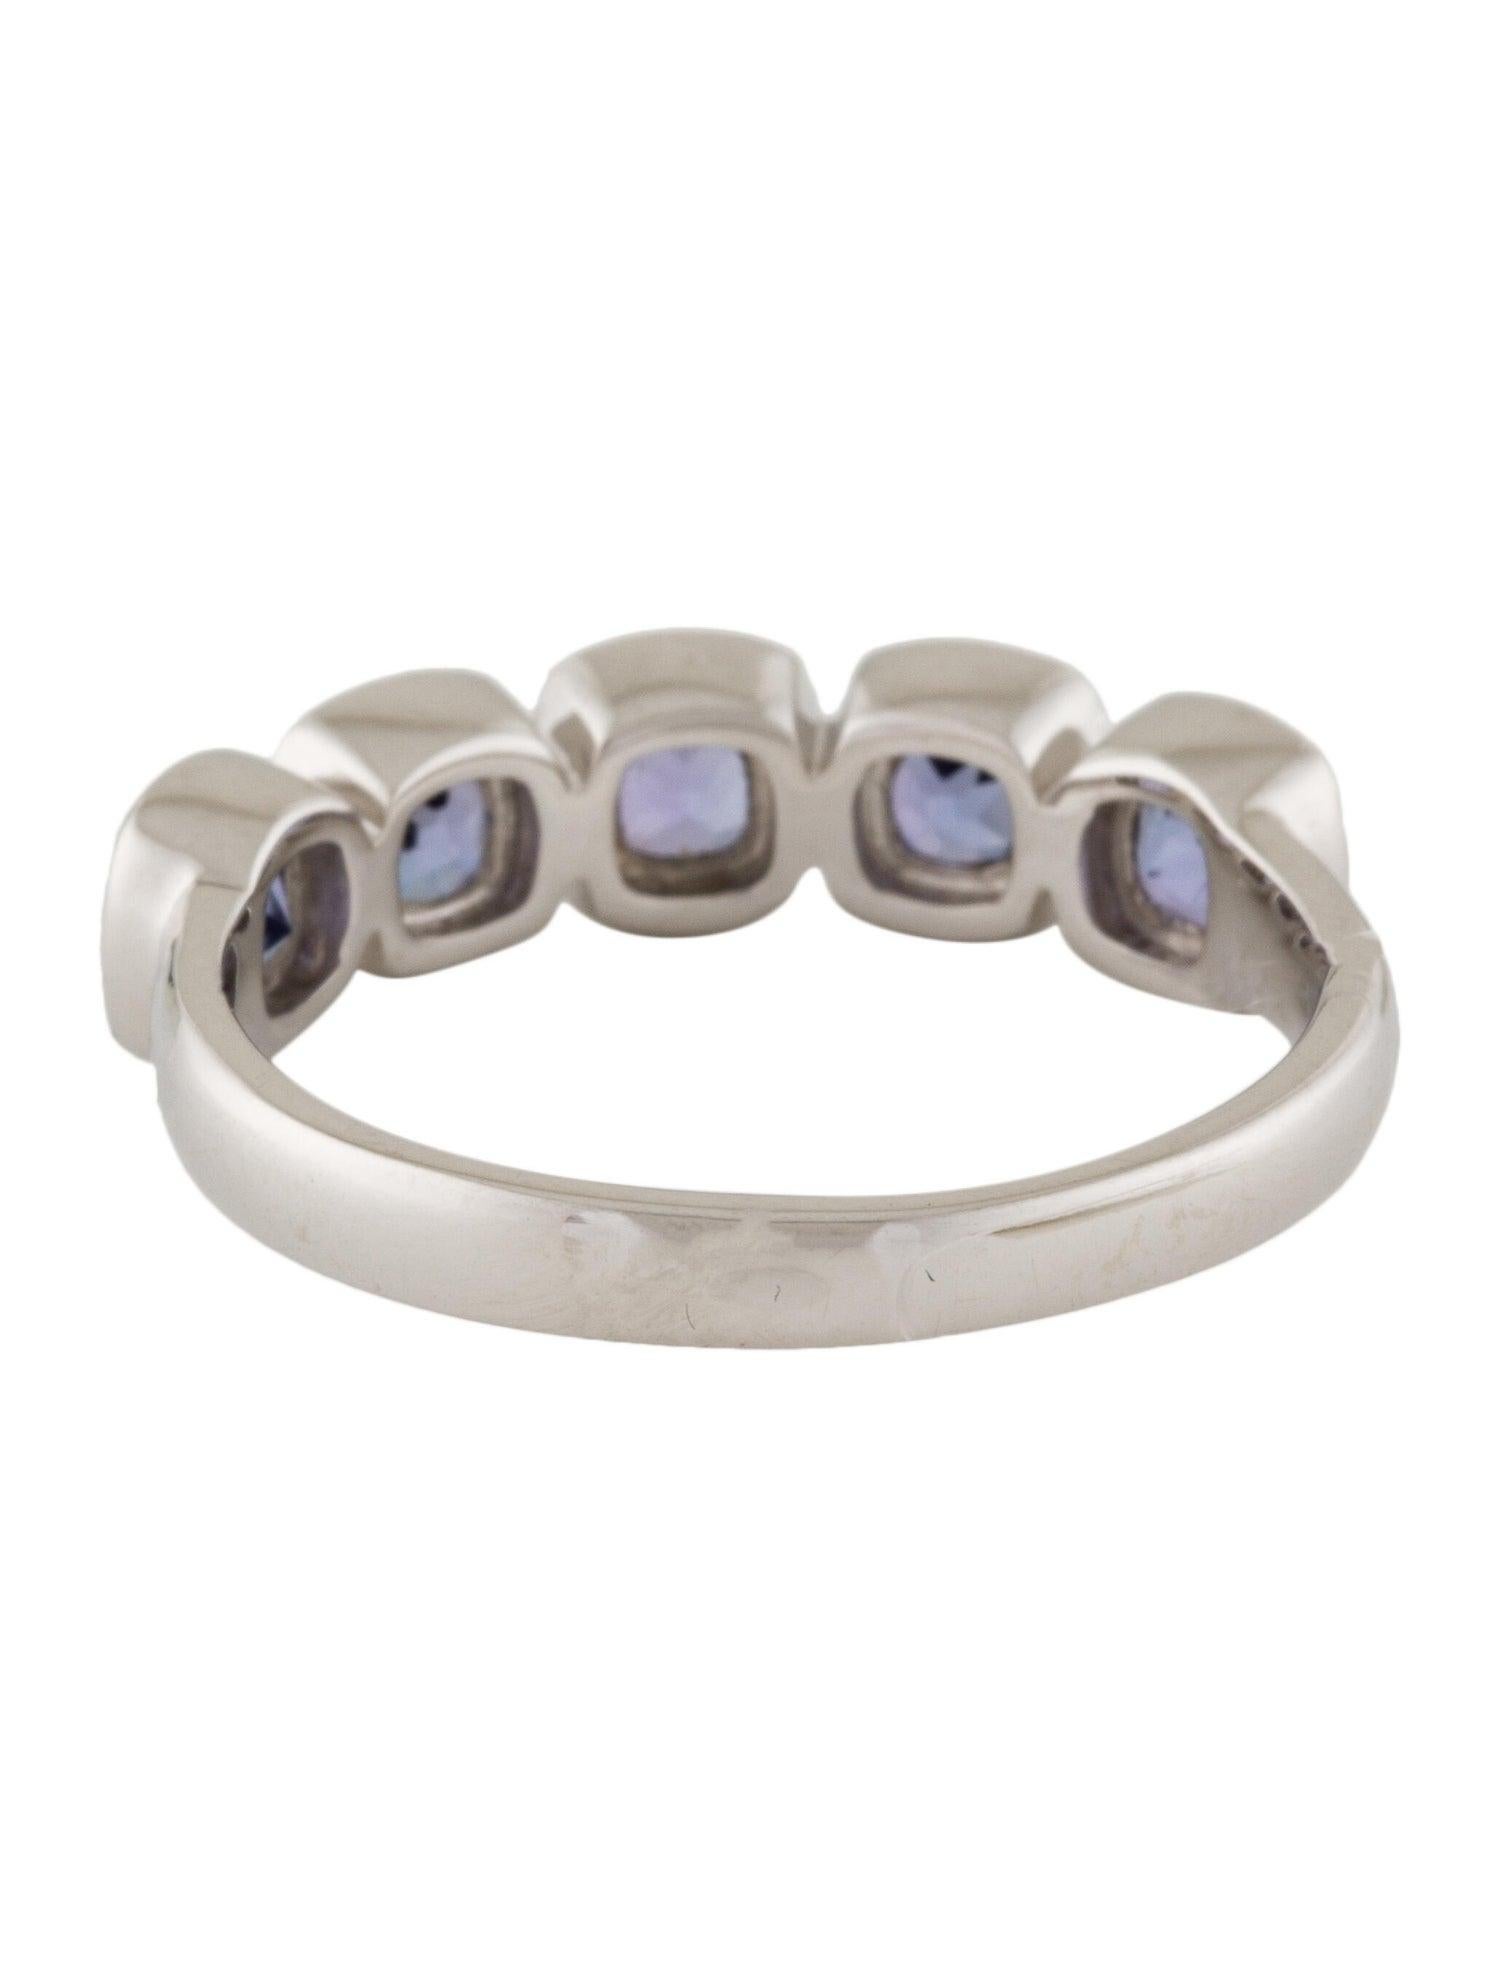 Cushion Cut Tanzanite Band Ring, 14K Gold, 1.50ctw, Size 7.75 - Elegant Gemstone Jewelry